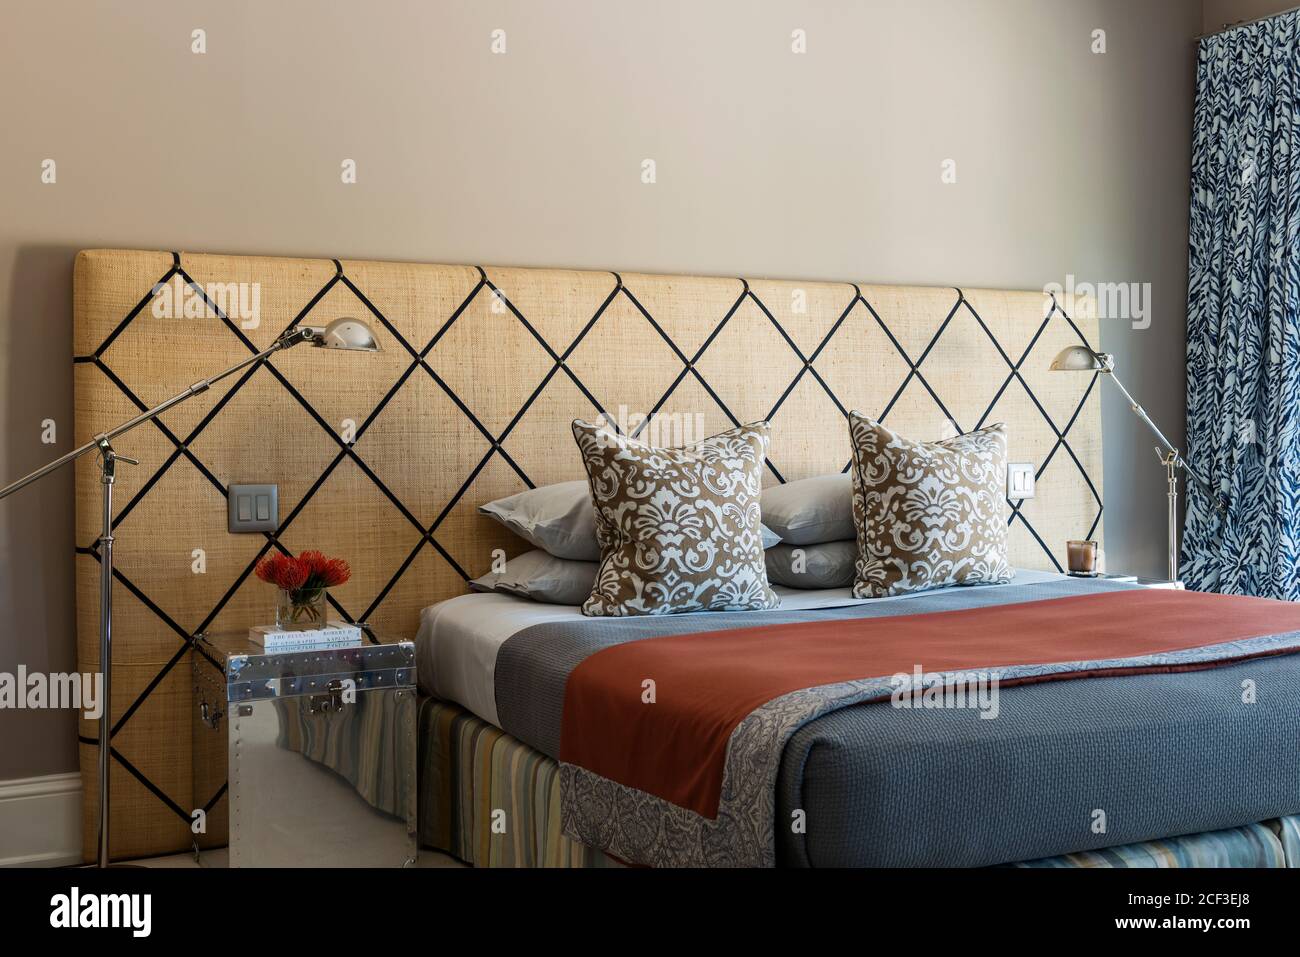 Contemporary bedroom with checked headboard Stock Photo